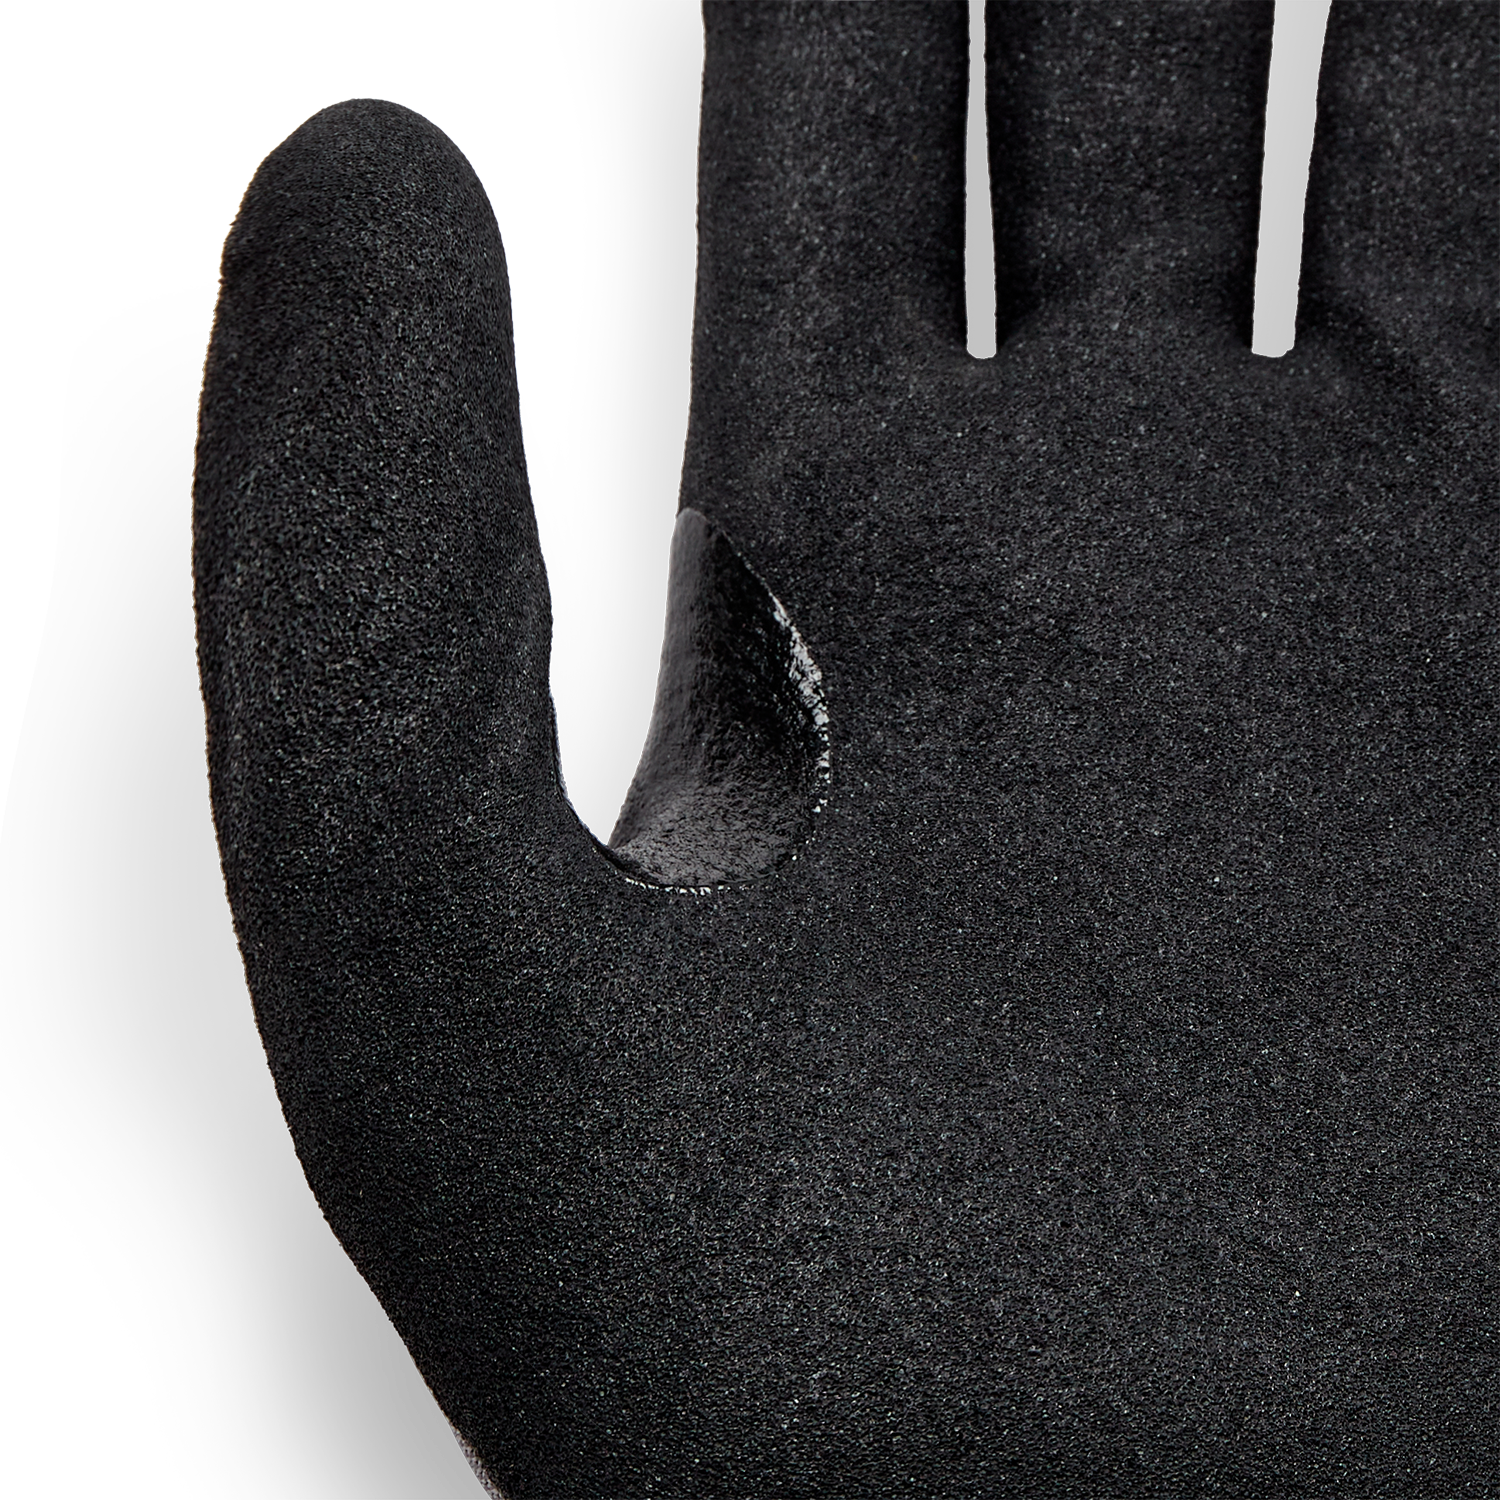 NORSE Cut-D cut-resistant assembly gloves size 7